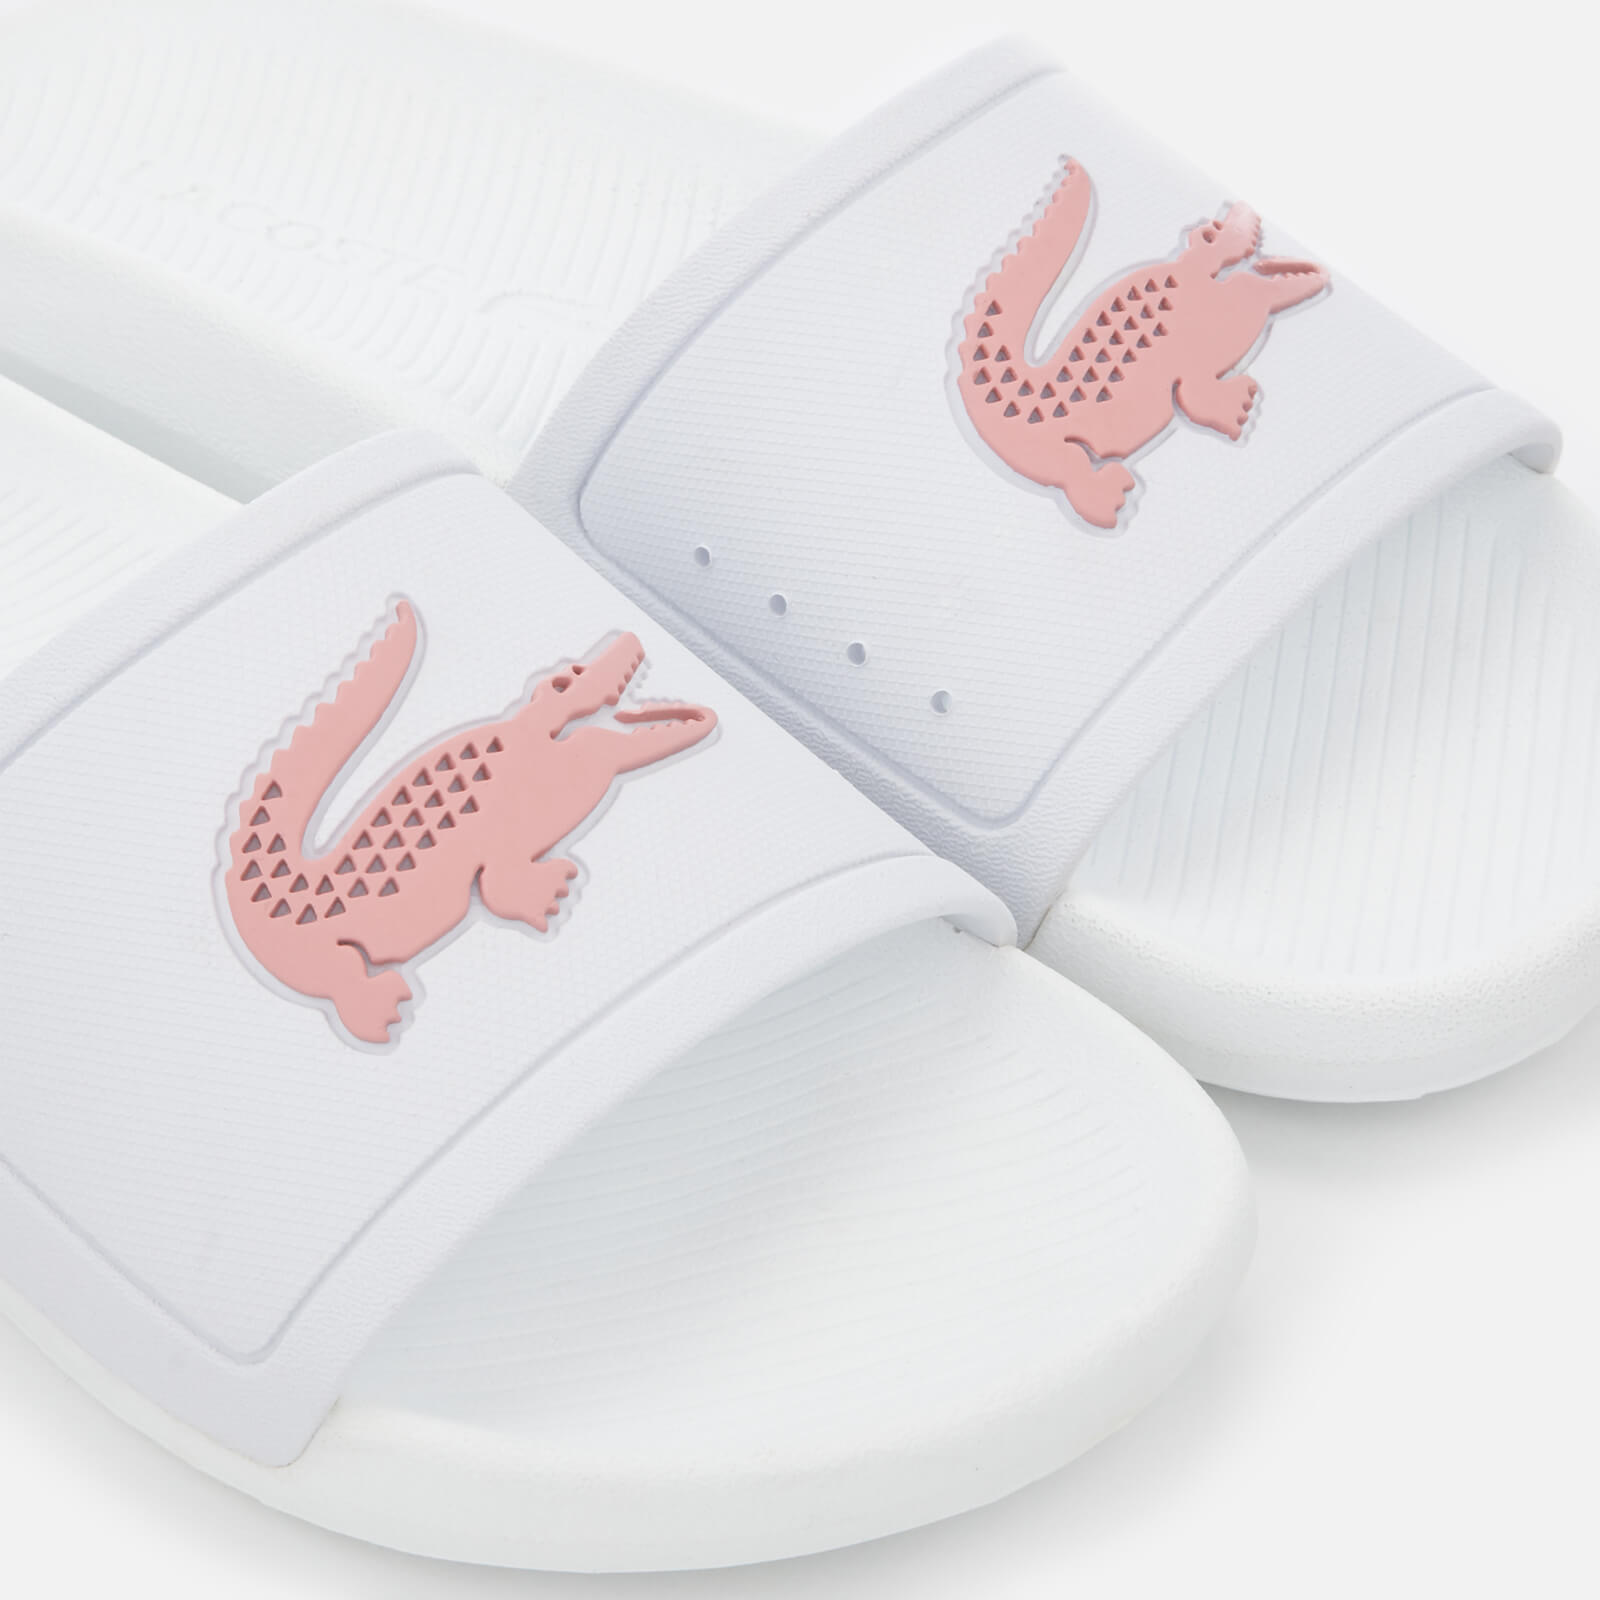 Lacoste Women's Croco Slide 119 3 Sandals - White/Light Pink - Uk 4